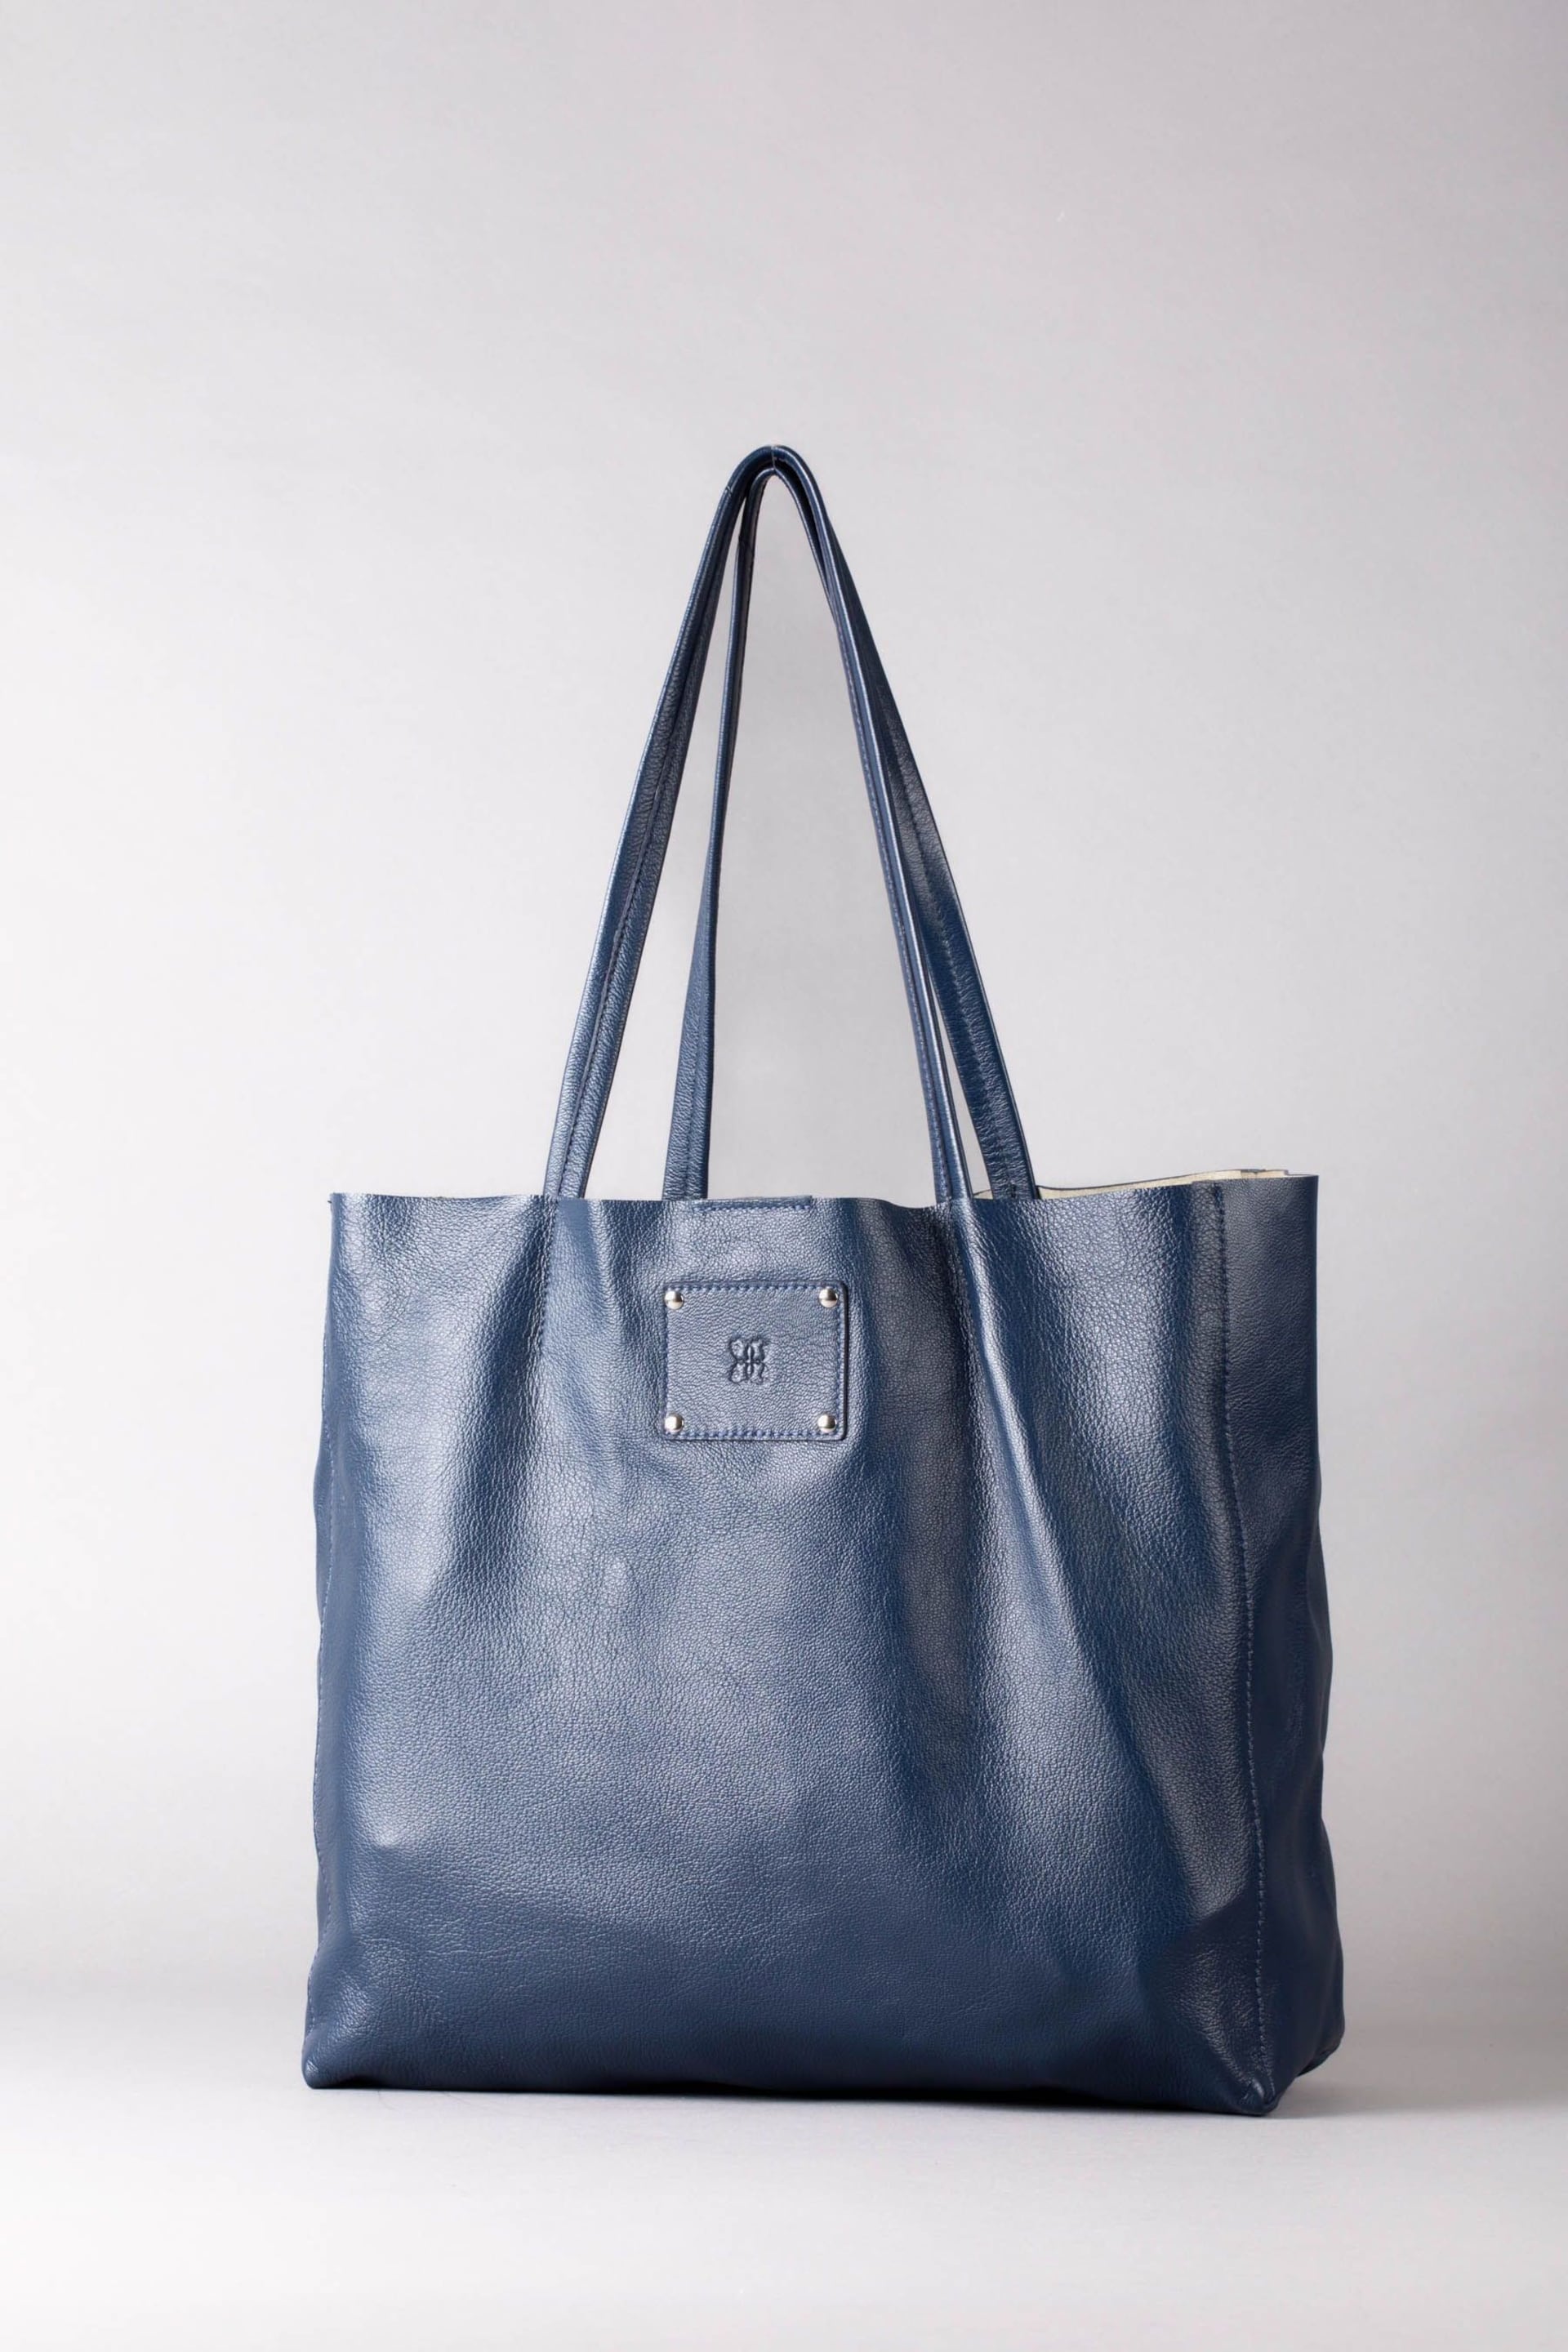 Lakeland Leather Blue Tarn Leather Bucket Bag - Image 2 of 8